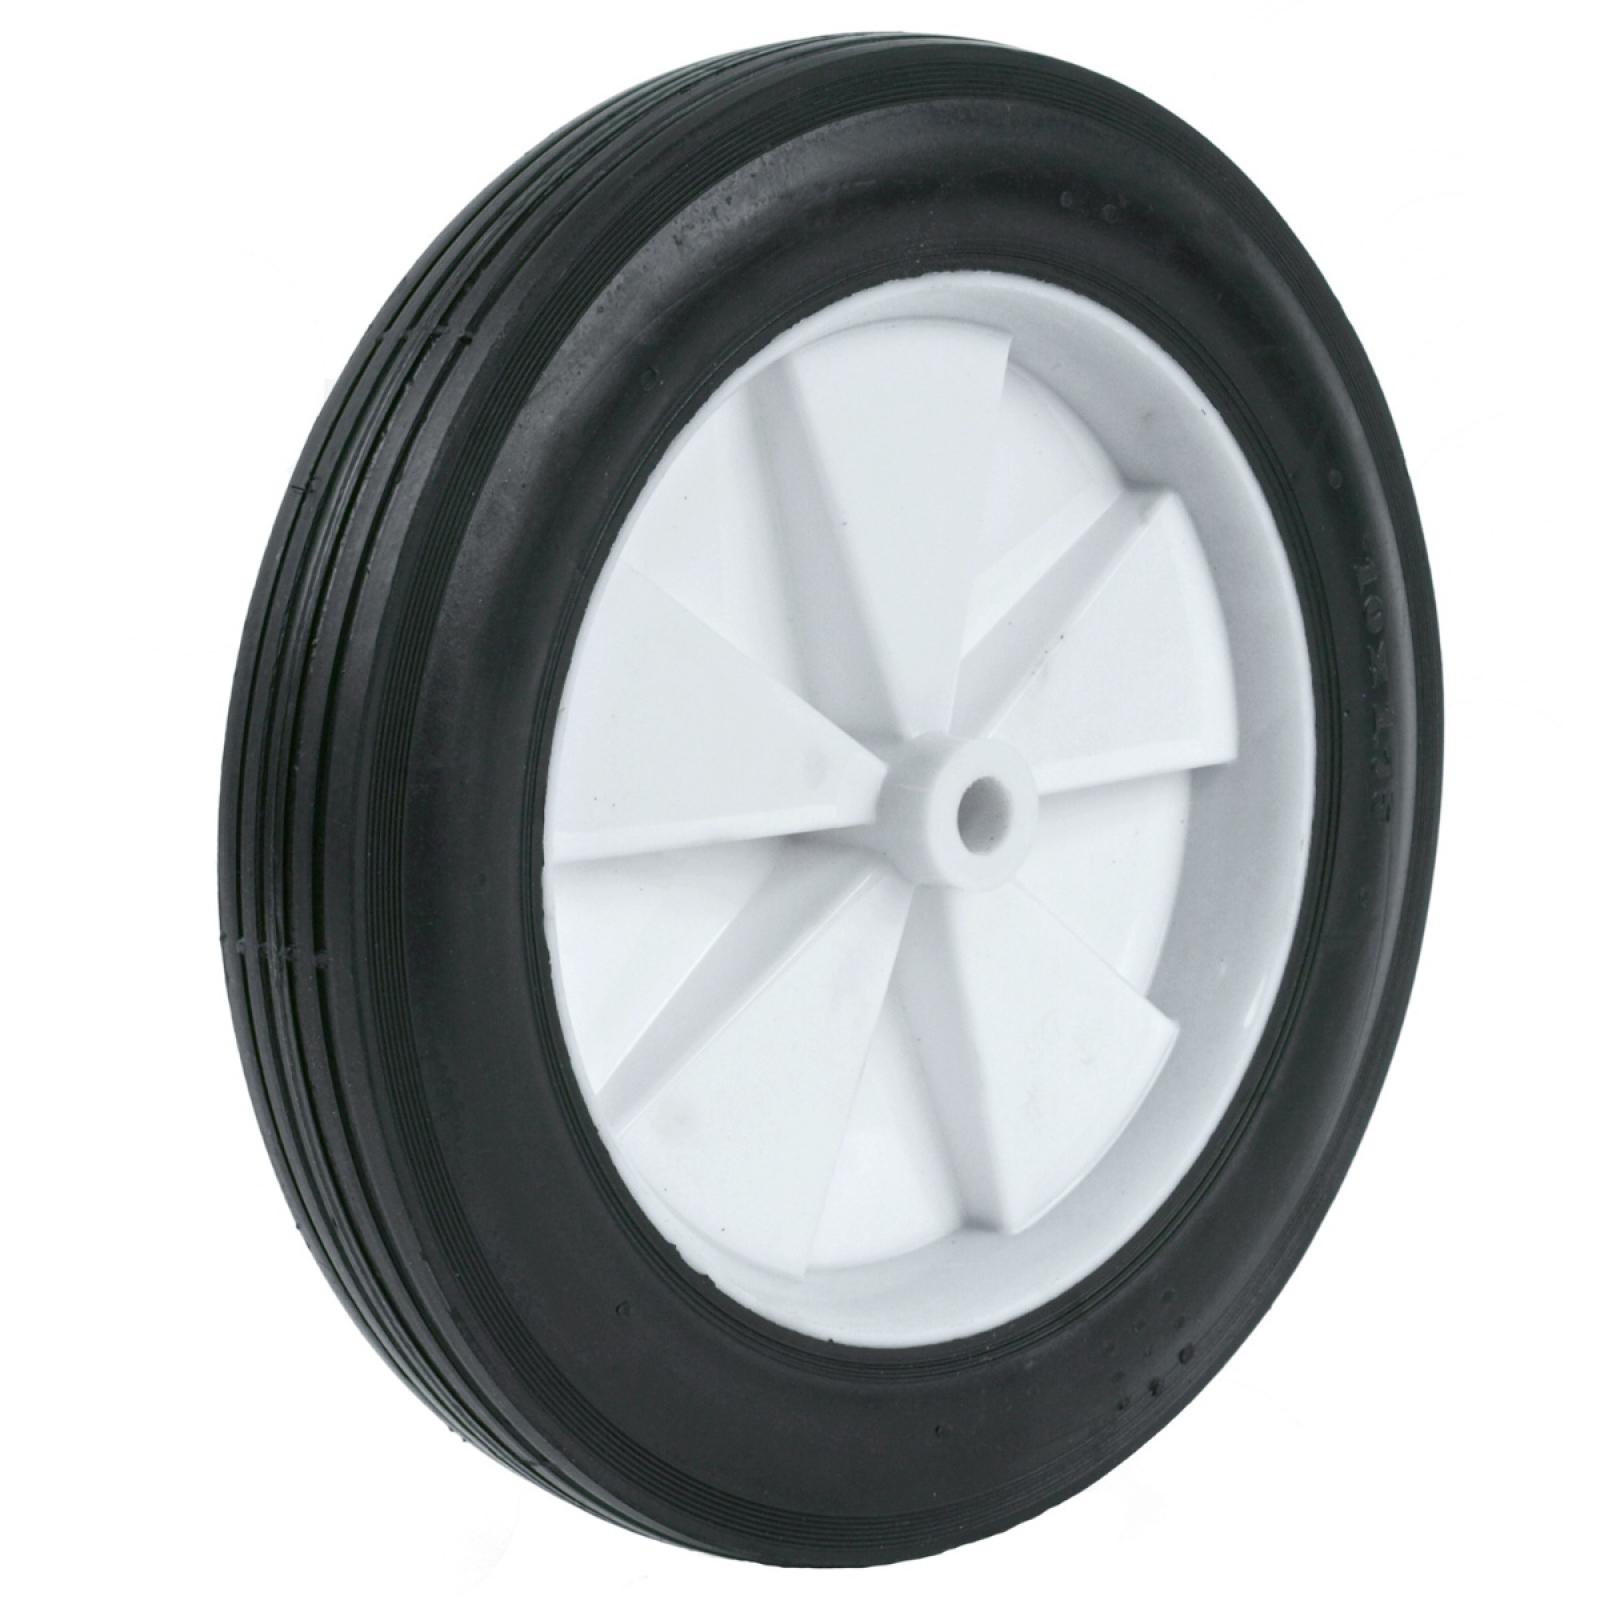 10 x 175 Plastic 2-1/16" Centered Hub Wheel